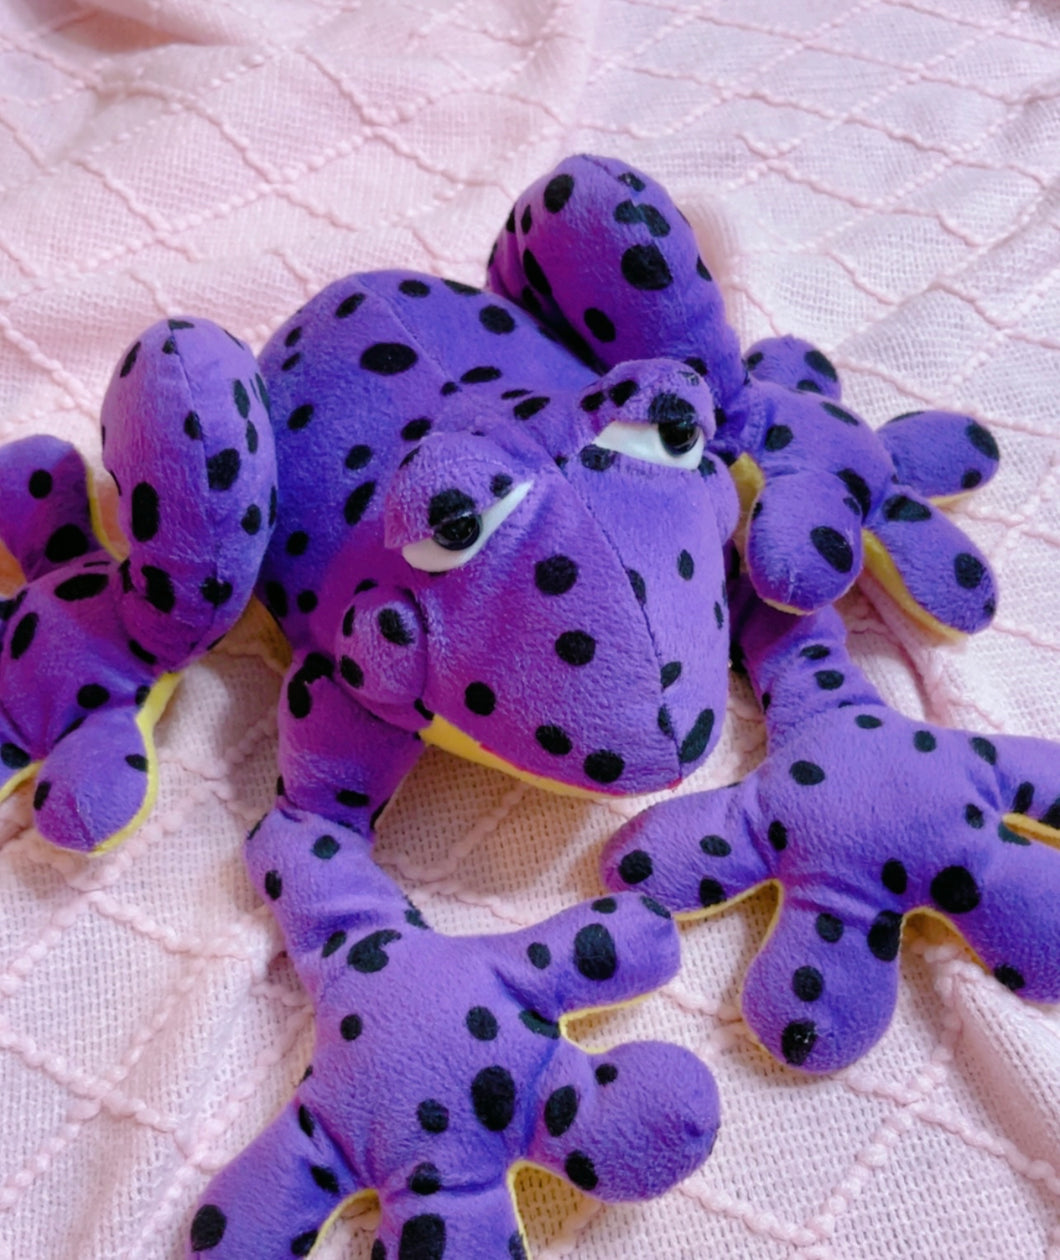 14” long Sugarloaf Froggy plush toy - purple and yellow fella